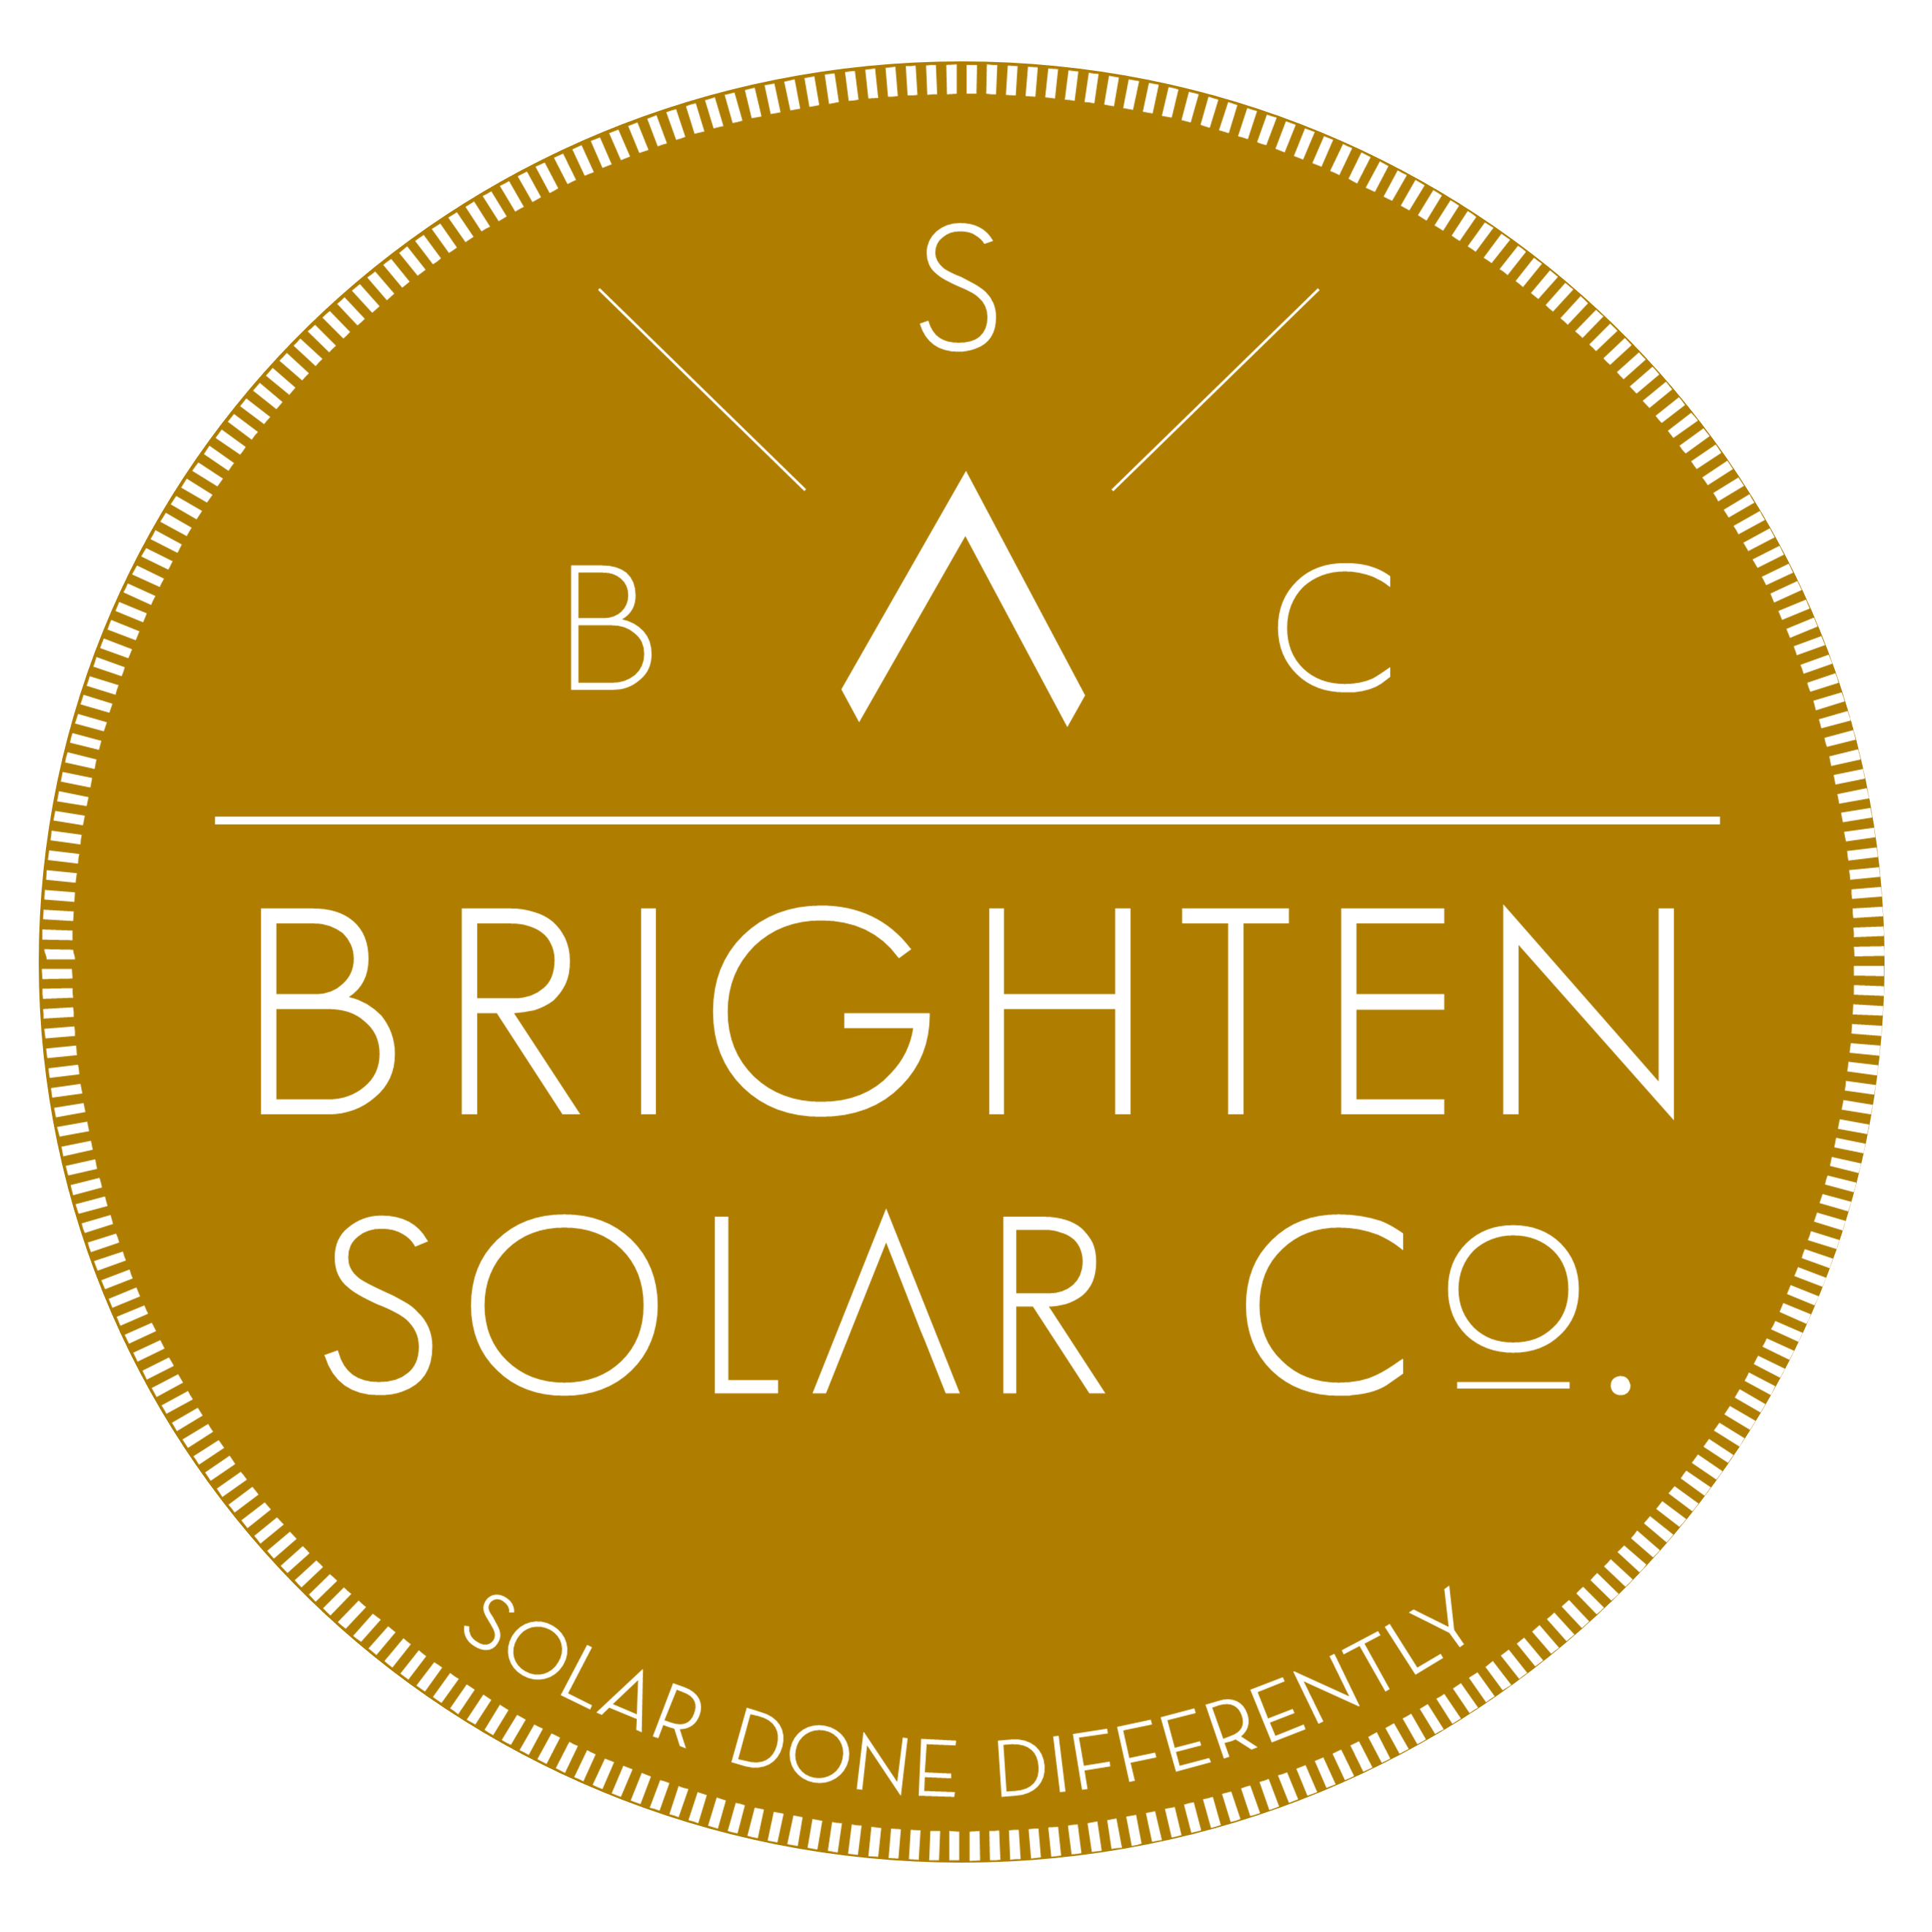 Brighten Solar Co. Photo